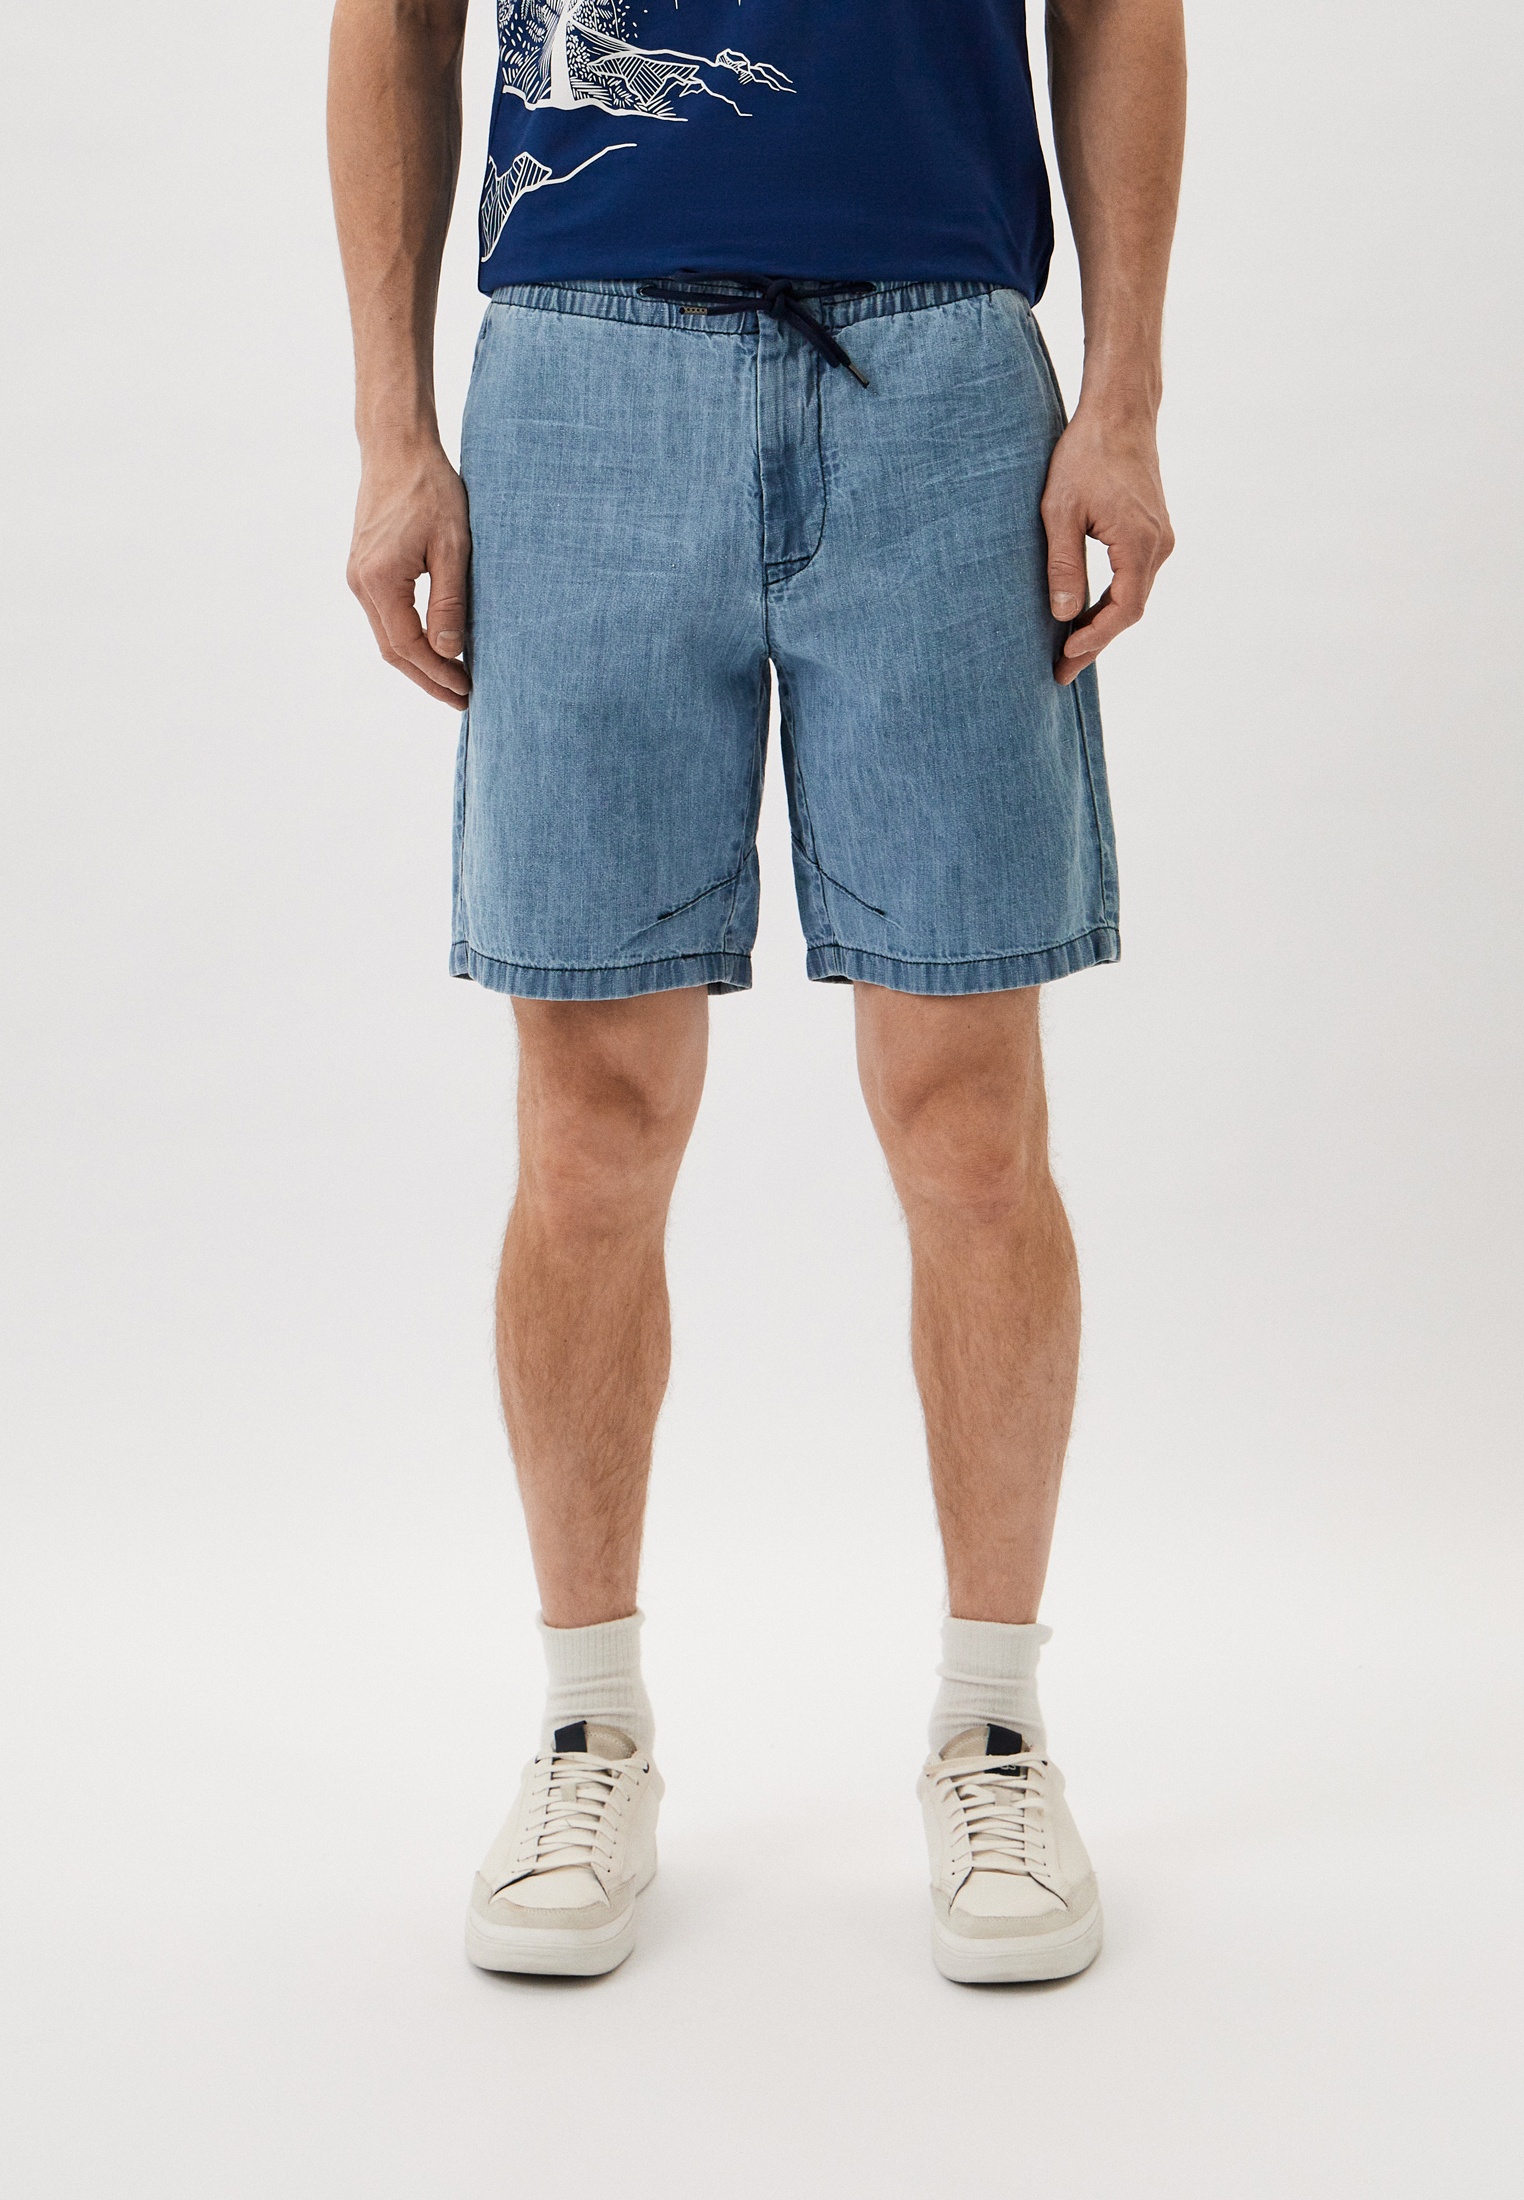 Мужские джинсовые шорты Bikkembergs (Биккембергс) CO04602T501A